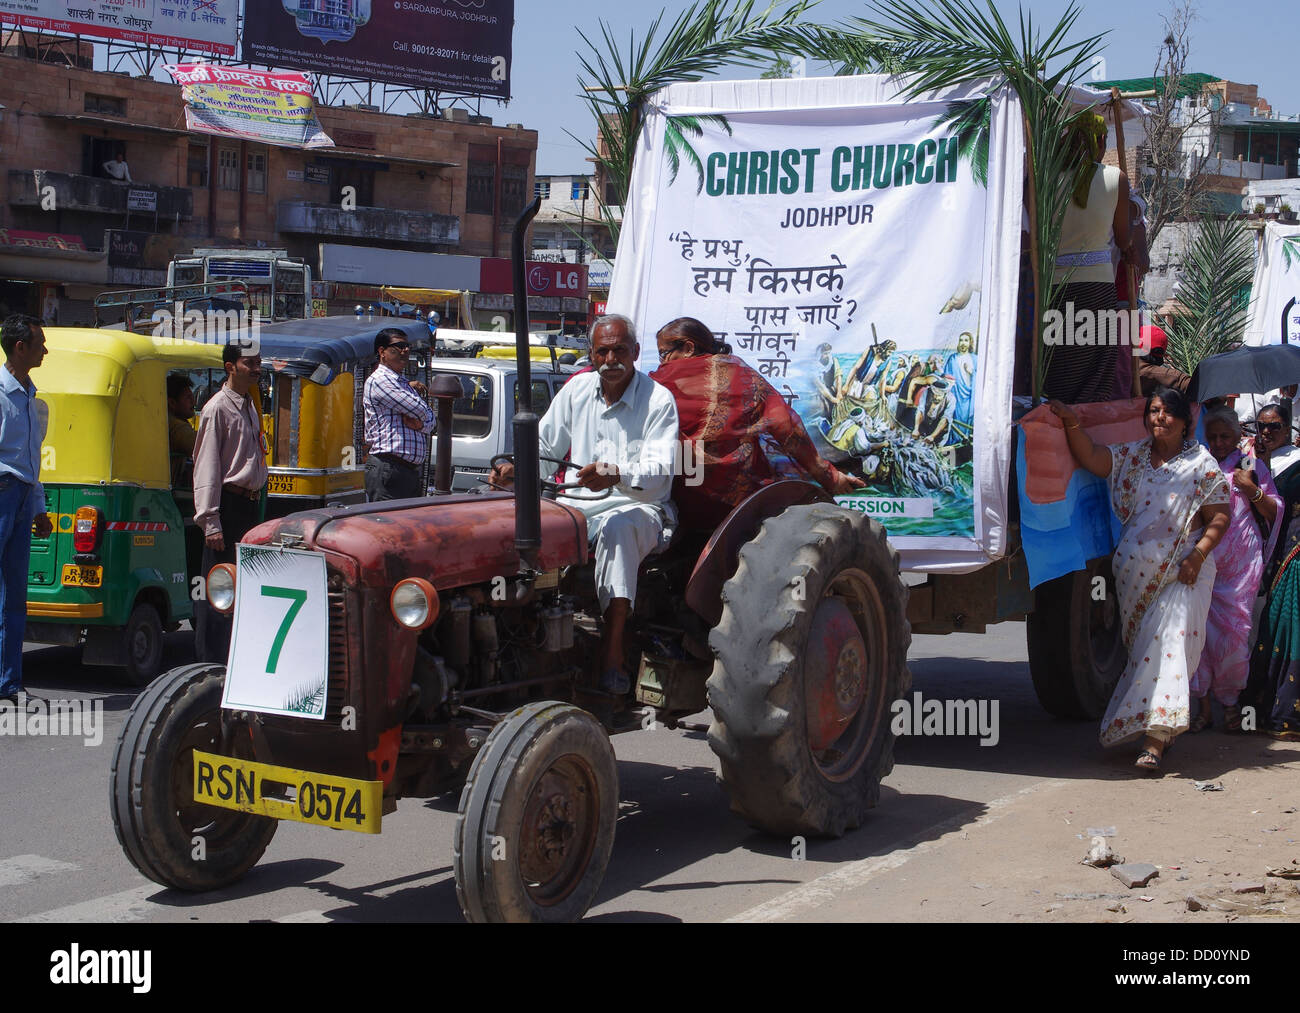 Christian Easter Parade with Jesus carrying the cross - Jodhpur, Rajashtan, India Stock Photo